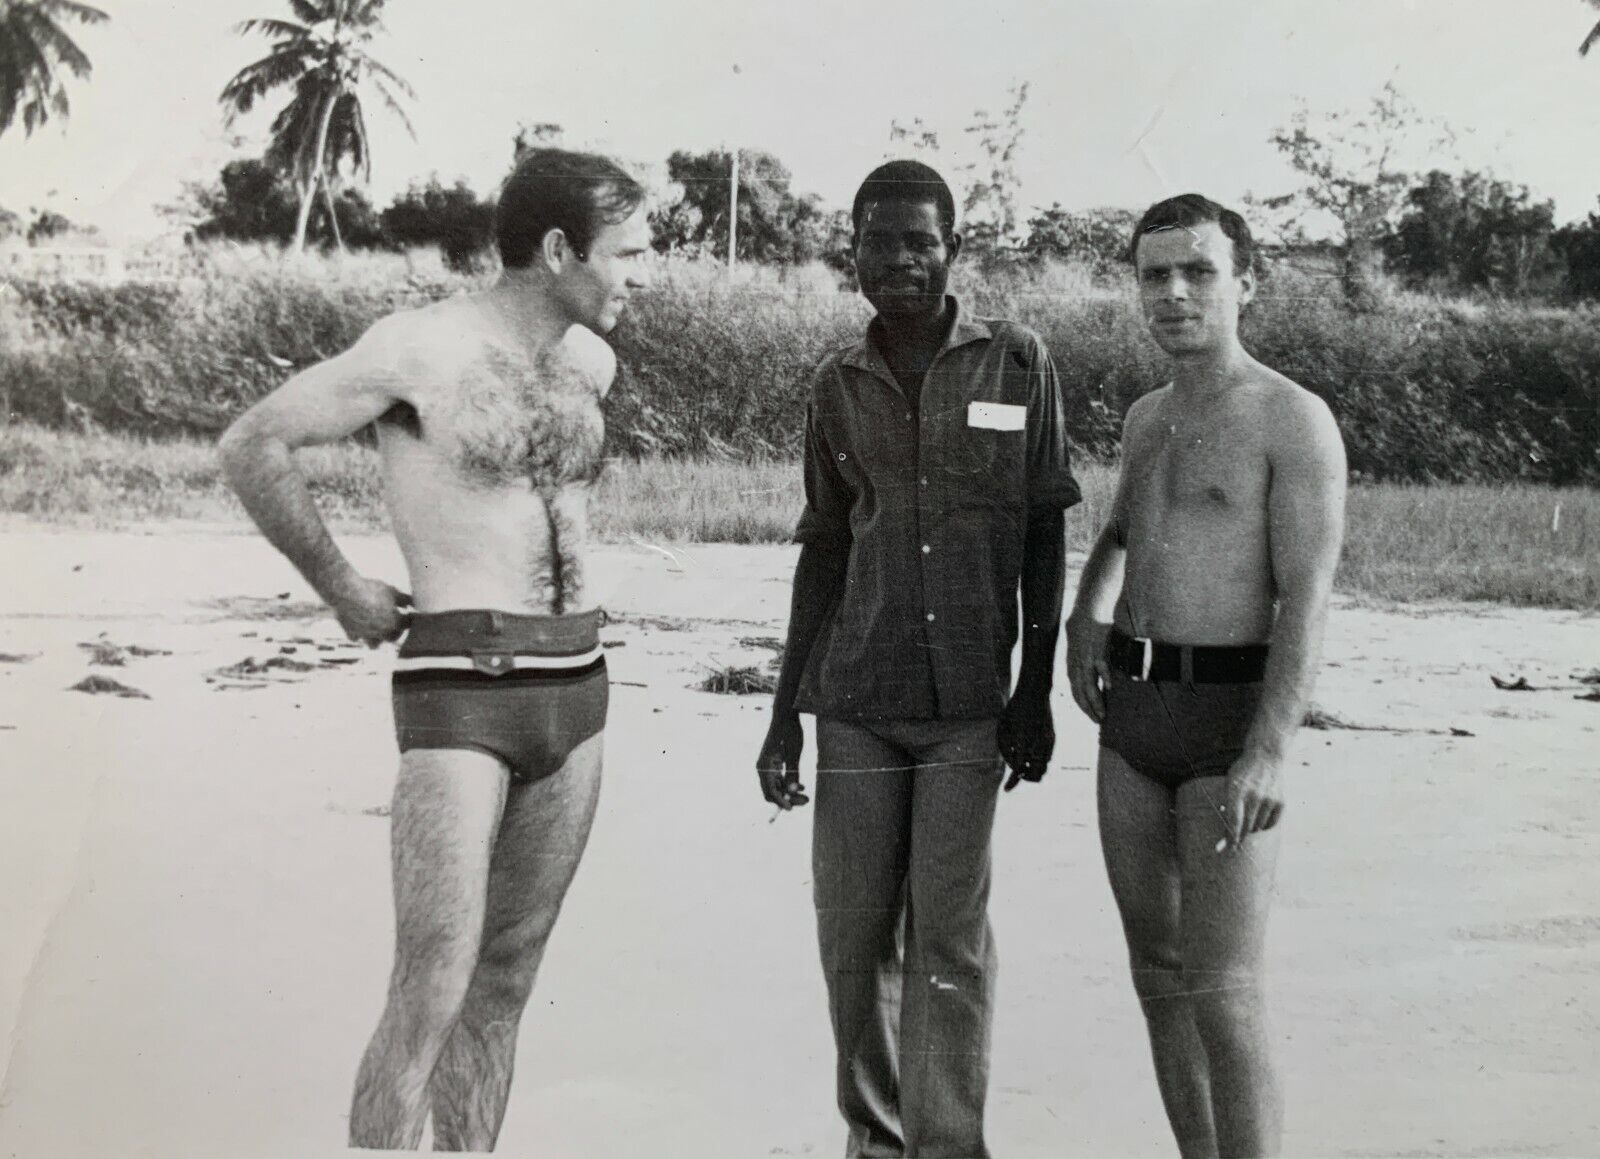 Shirtless Affectionate Men Trunks Bulge African American Gay Interest Vtg Photo